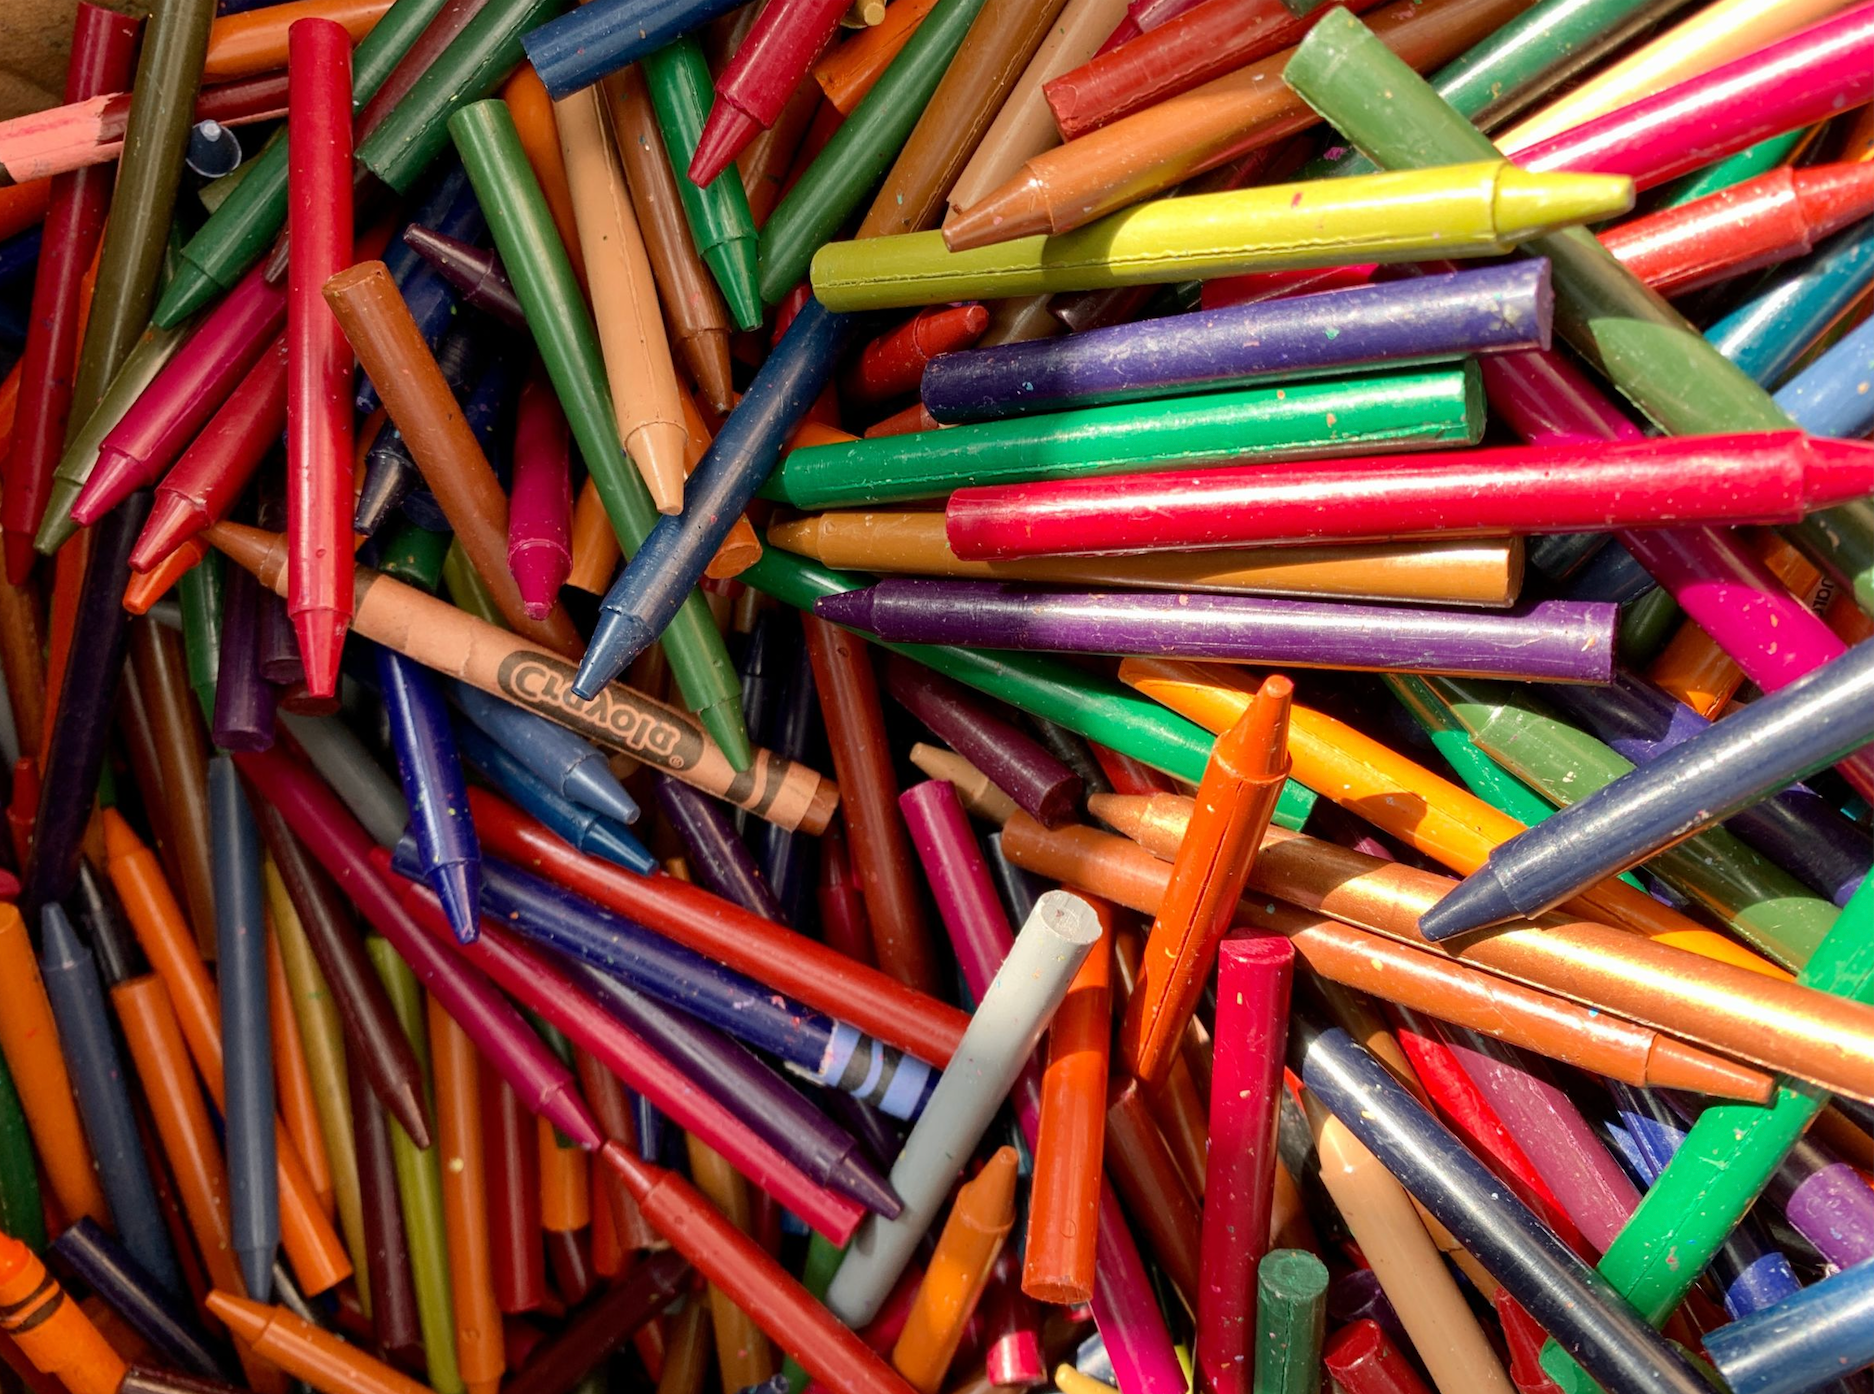 Multi-Color Rainbow Crayon Set 6 colors 25/Box